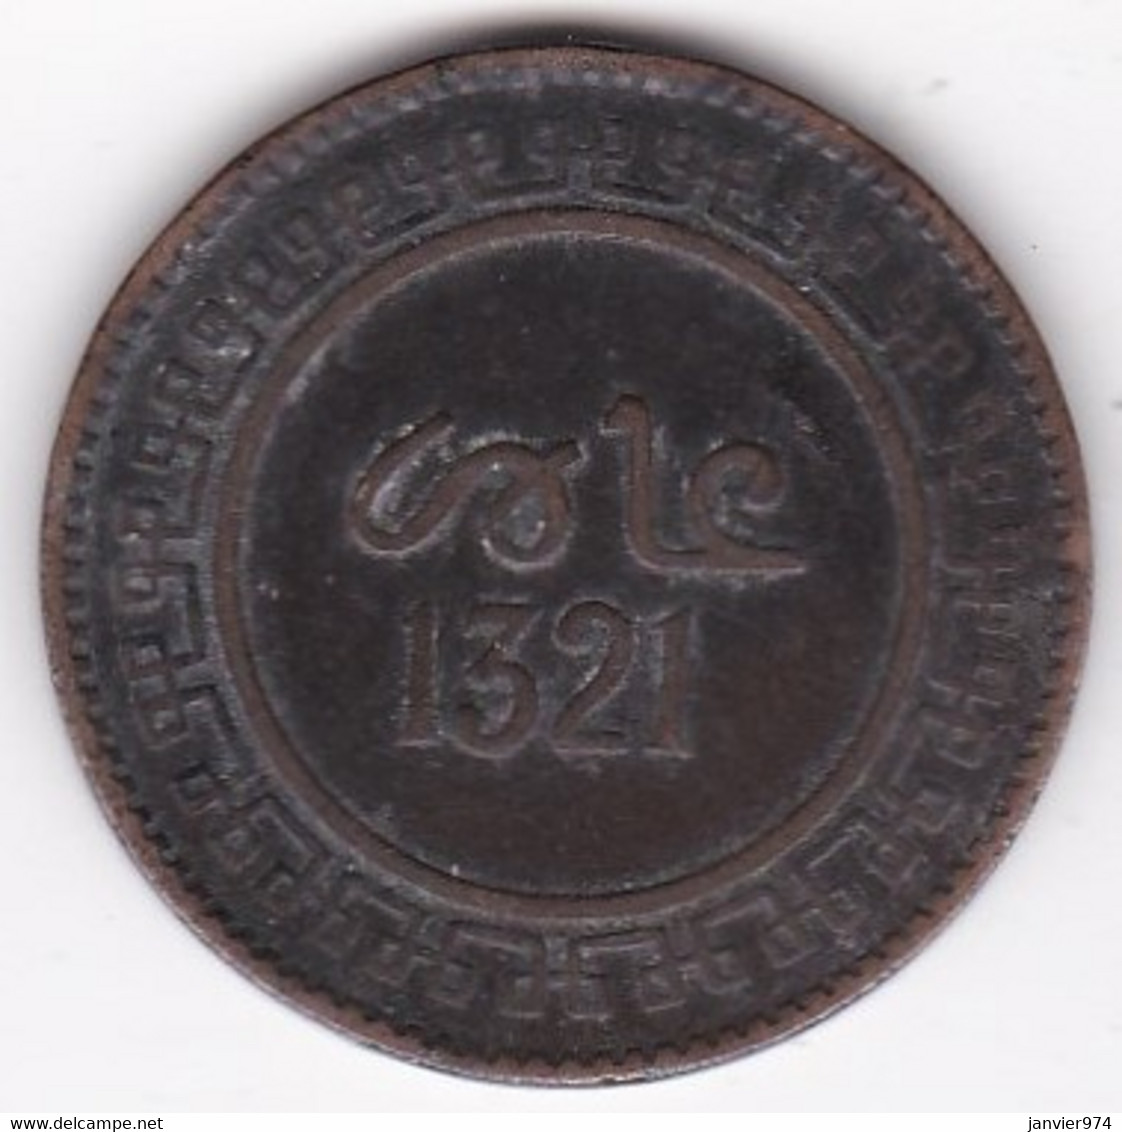 Protectorat Français 10 Mouzounas HA 1321 - 1903 Birmingham. Frappe Médaille. Bronze , Lec# 87 - Morocco